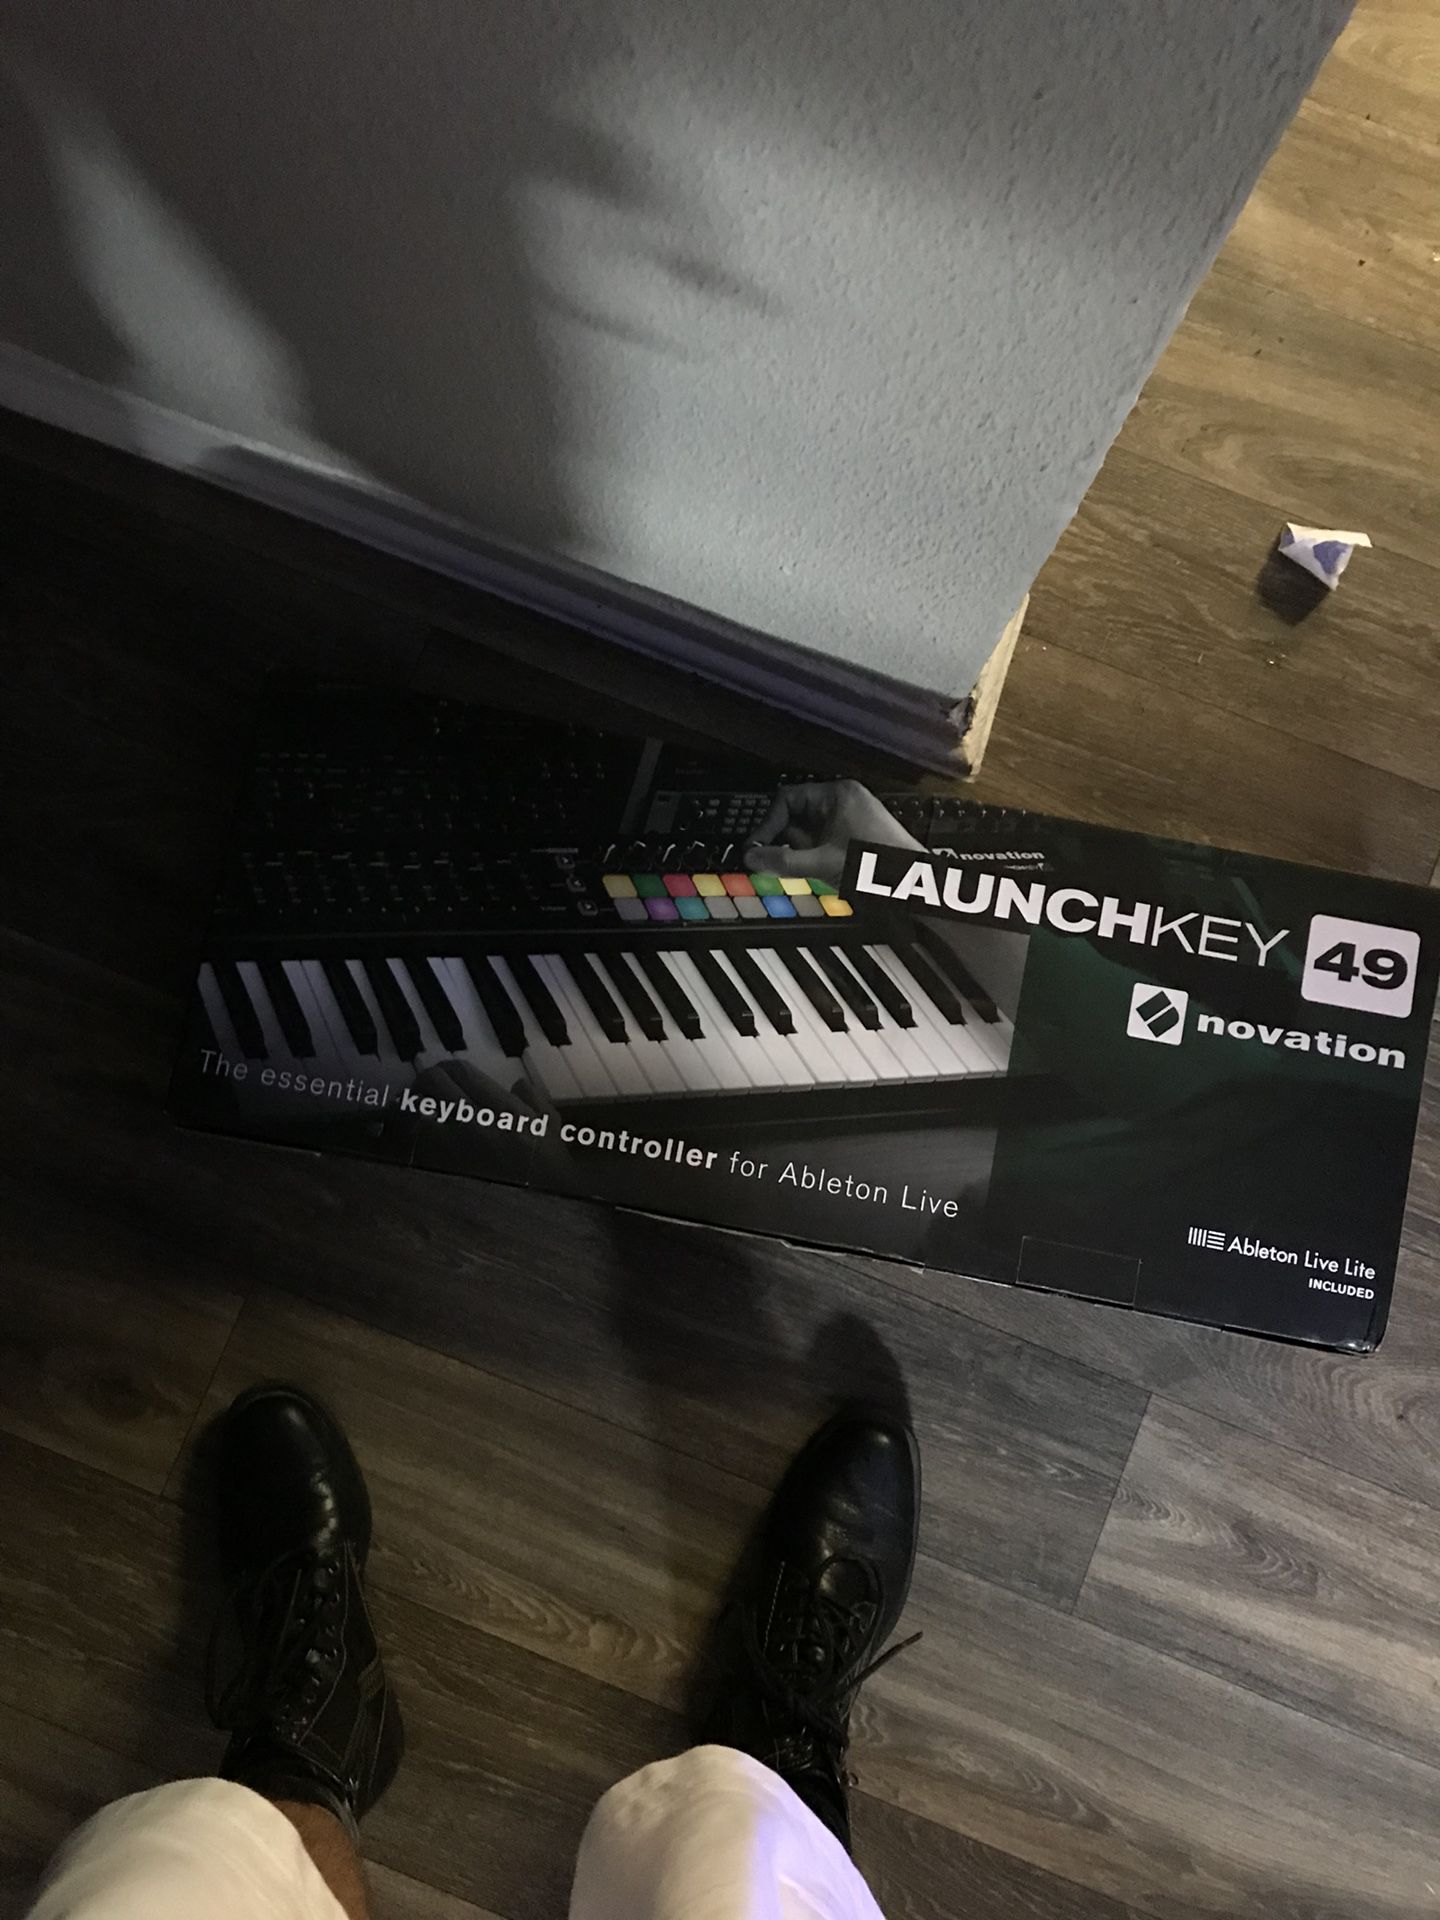 Launch Key 49 novation music production keyboard